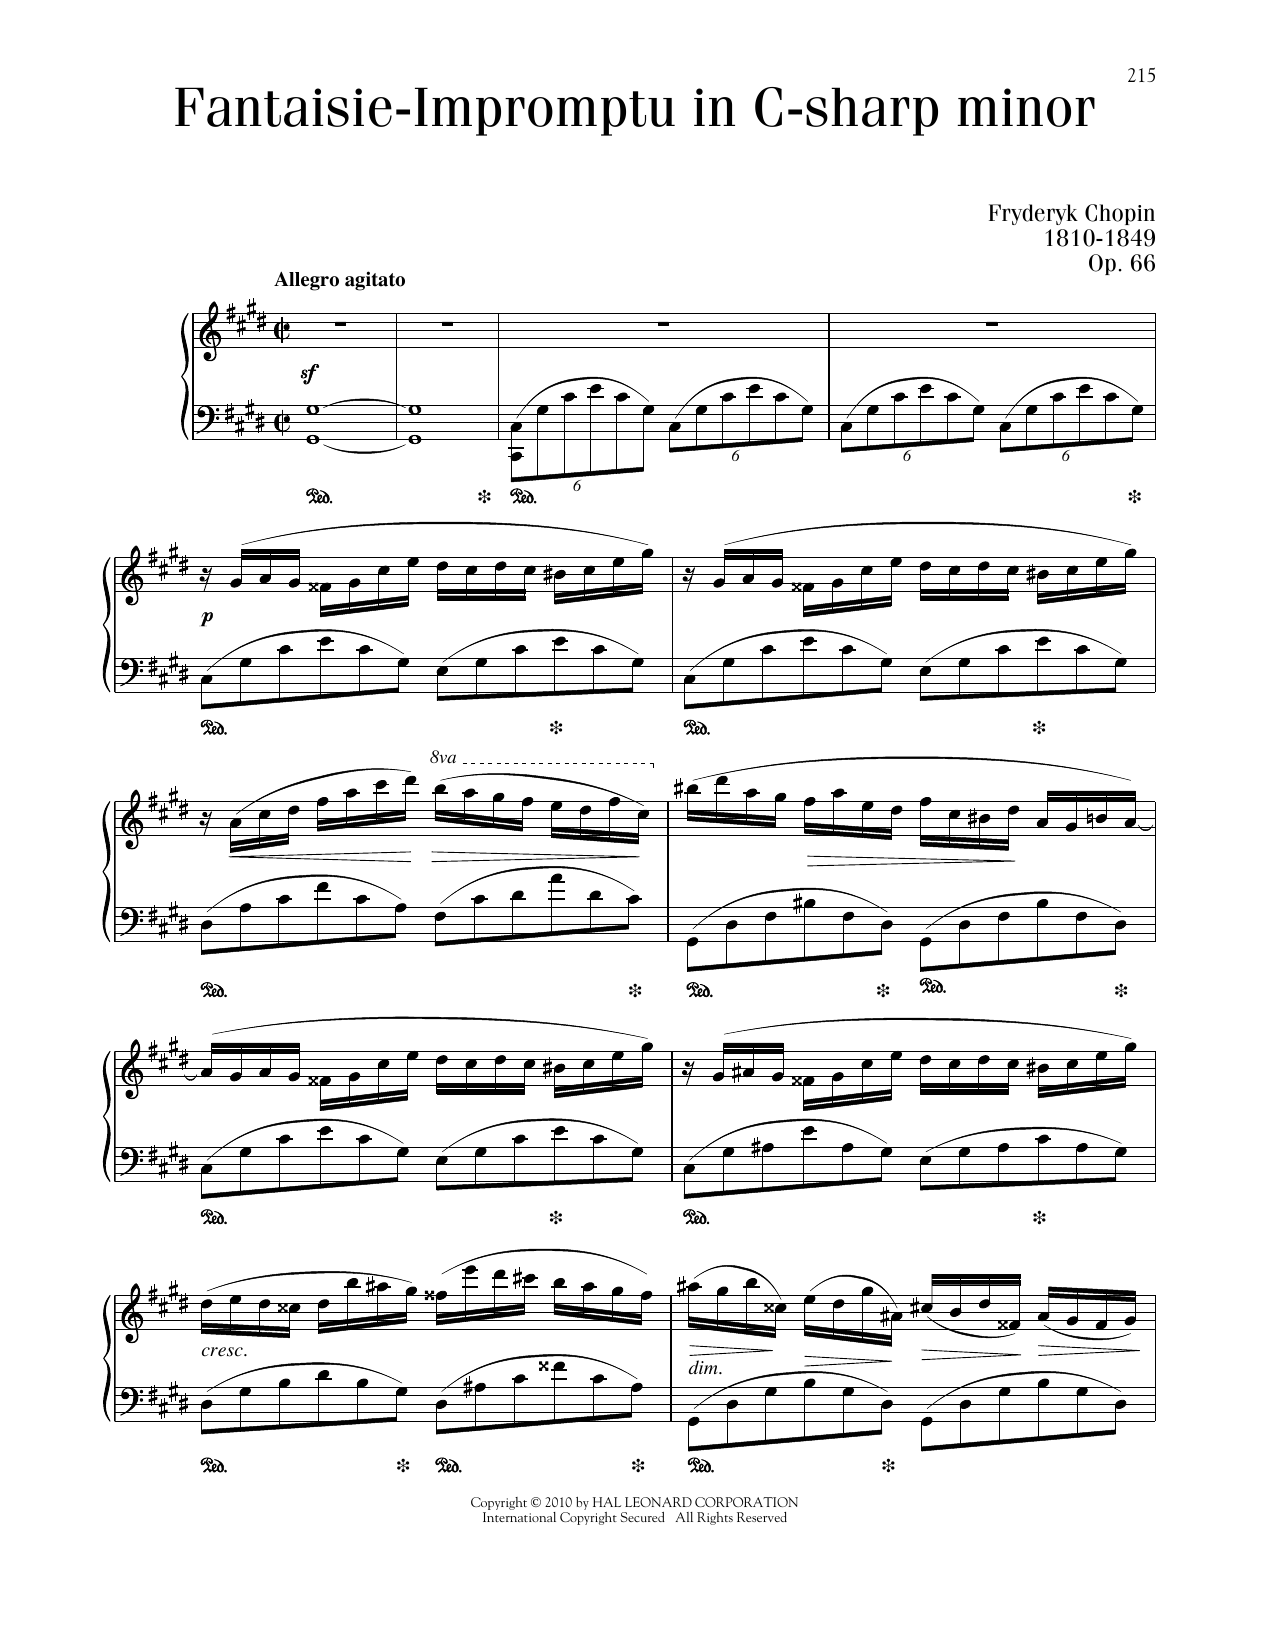 Frédéric Chopin Fantaisie-Impromptu, Op. 66 (Posthumous) sheet music notes printable PDF score